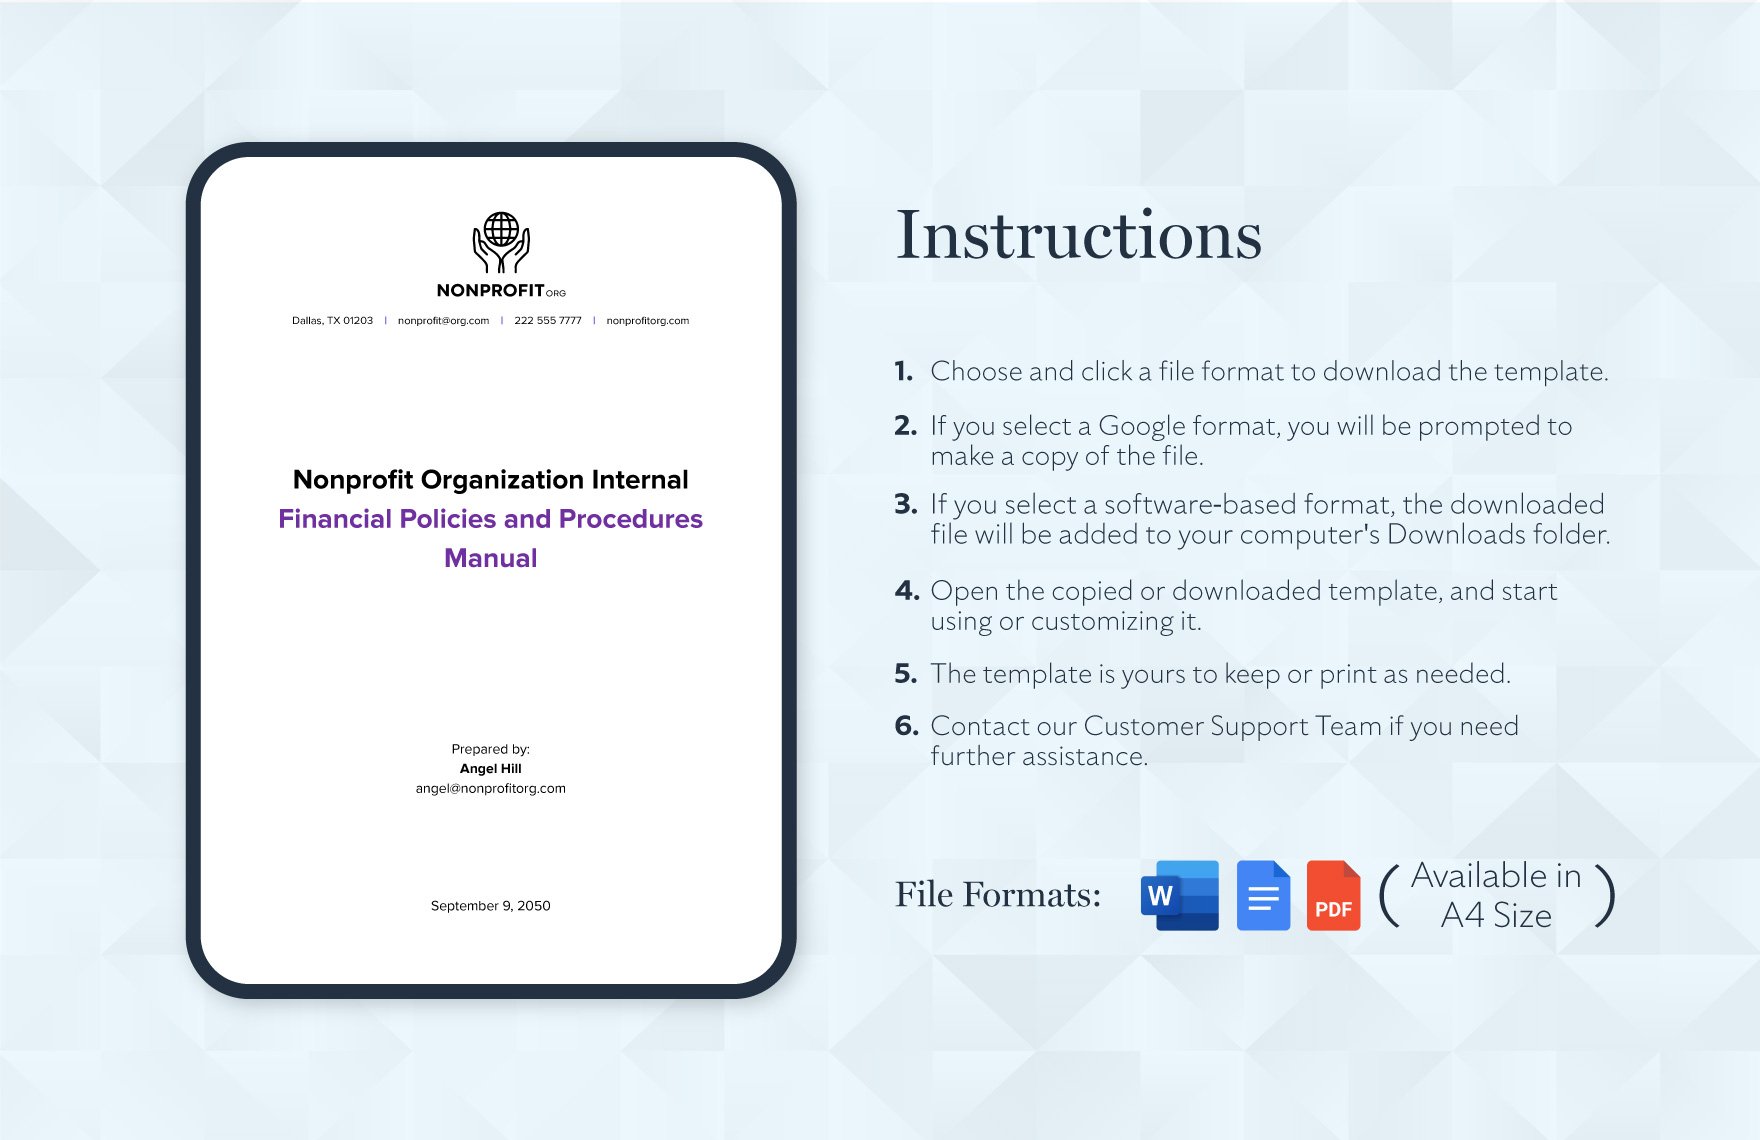 Nonprofit Organization Internal Financial Policies and Procedures Manual Template